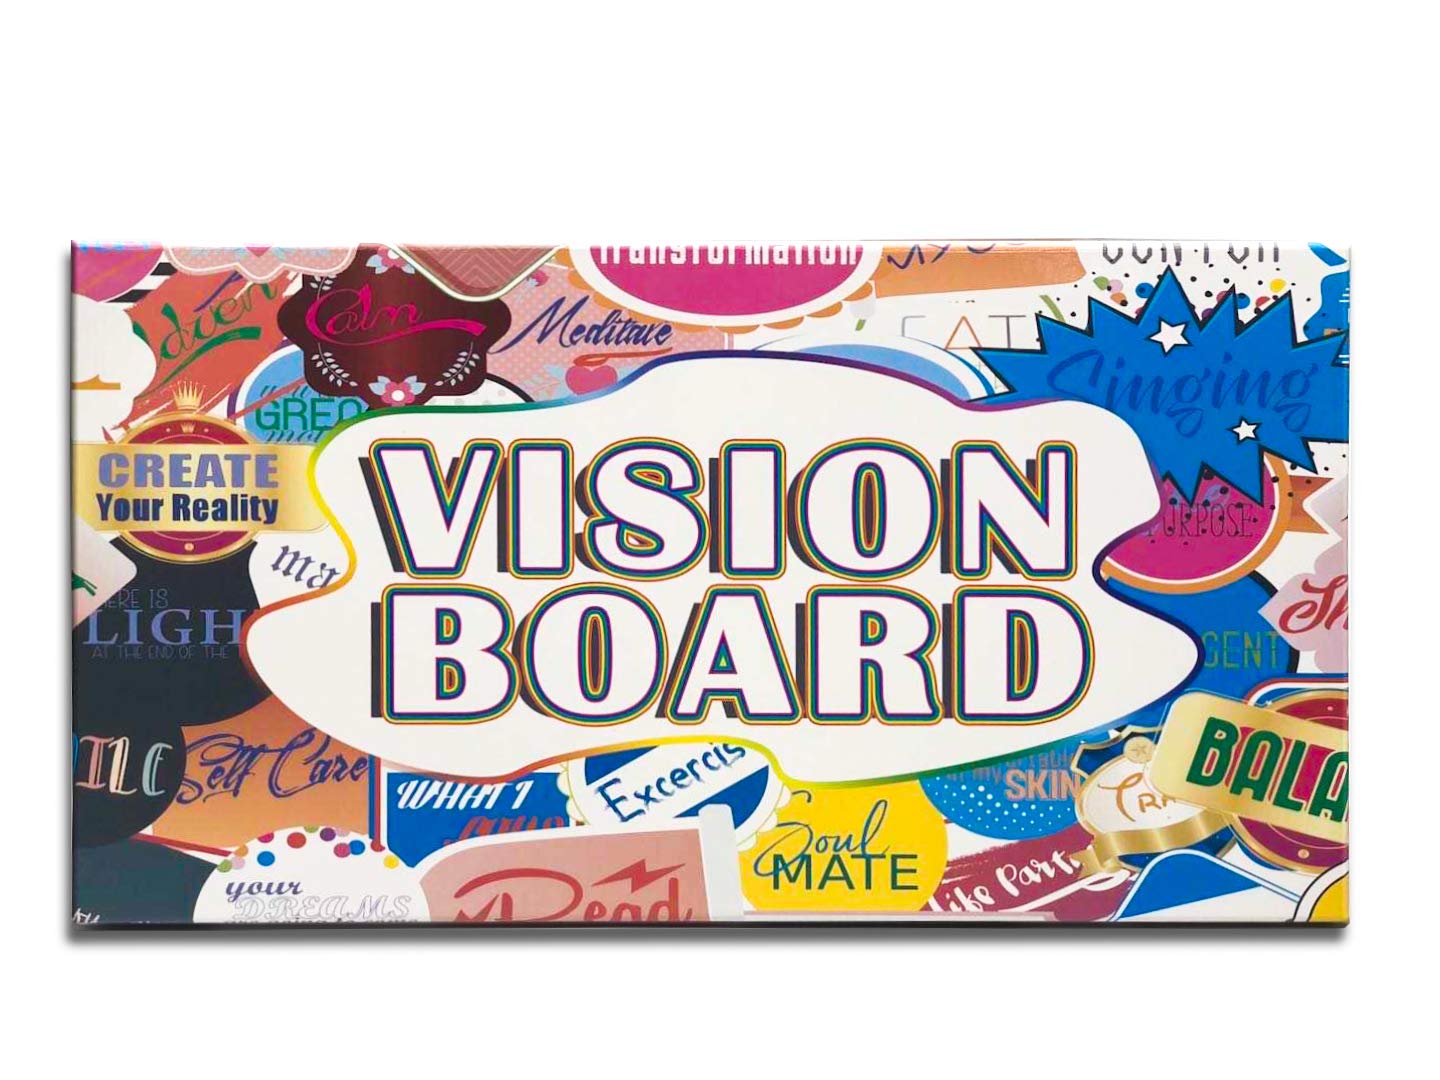 3 in 1 Vision Board: Decorative, Foldable, Dry Erase Vision Board kit ...